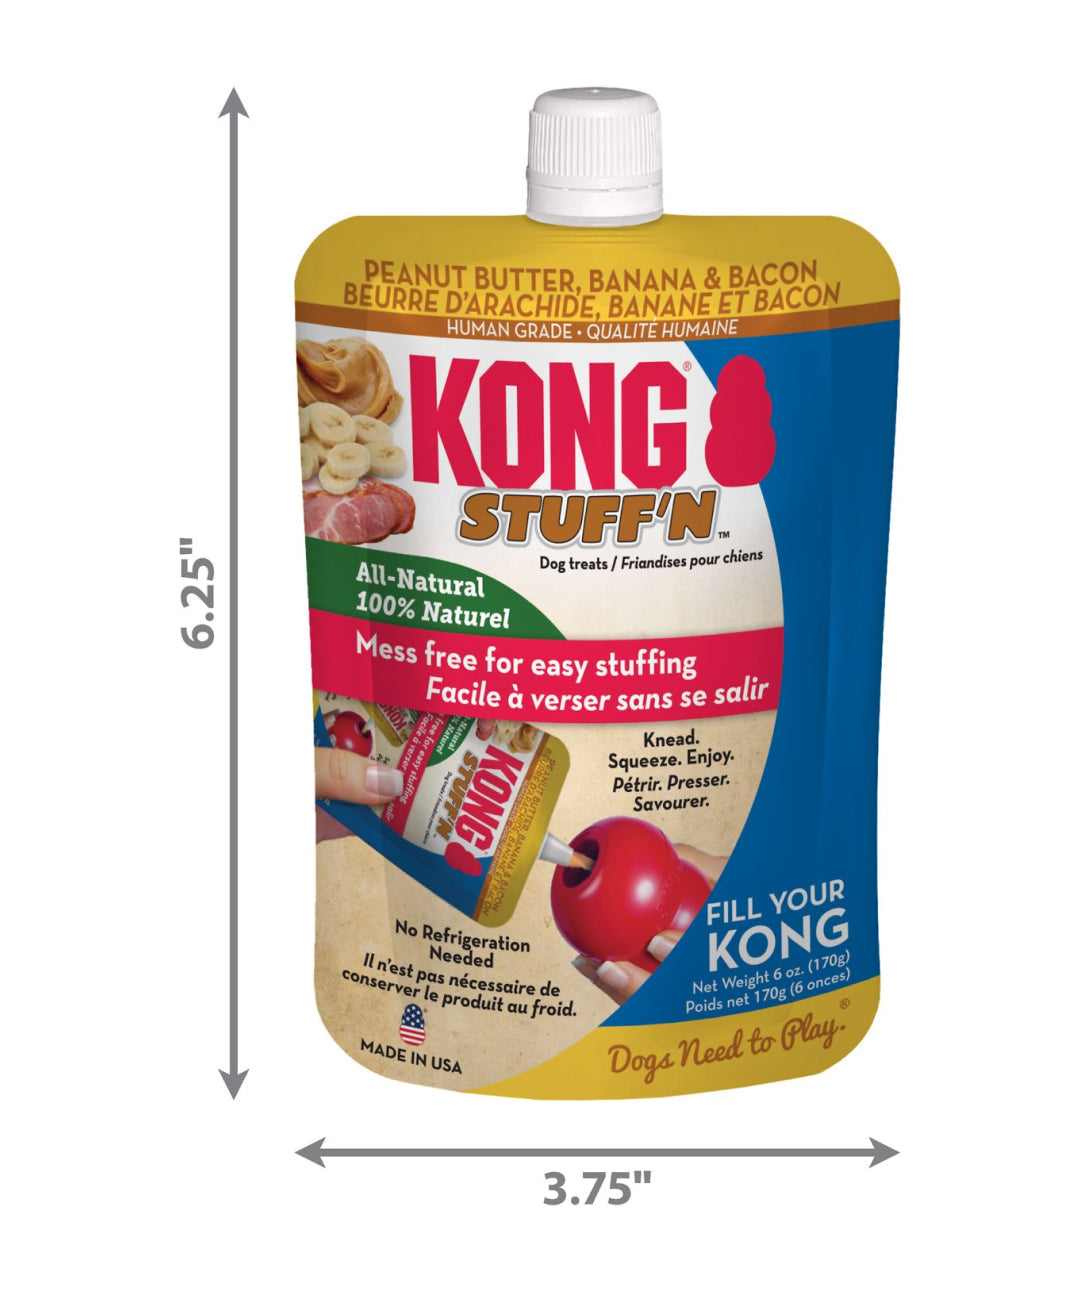 Kong Easy Treat, Peanut Butter Flavor - 8 oz